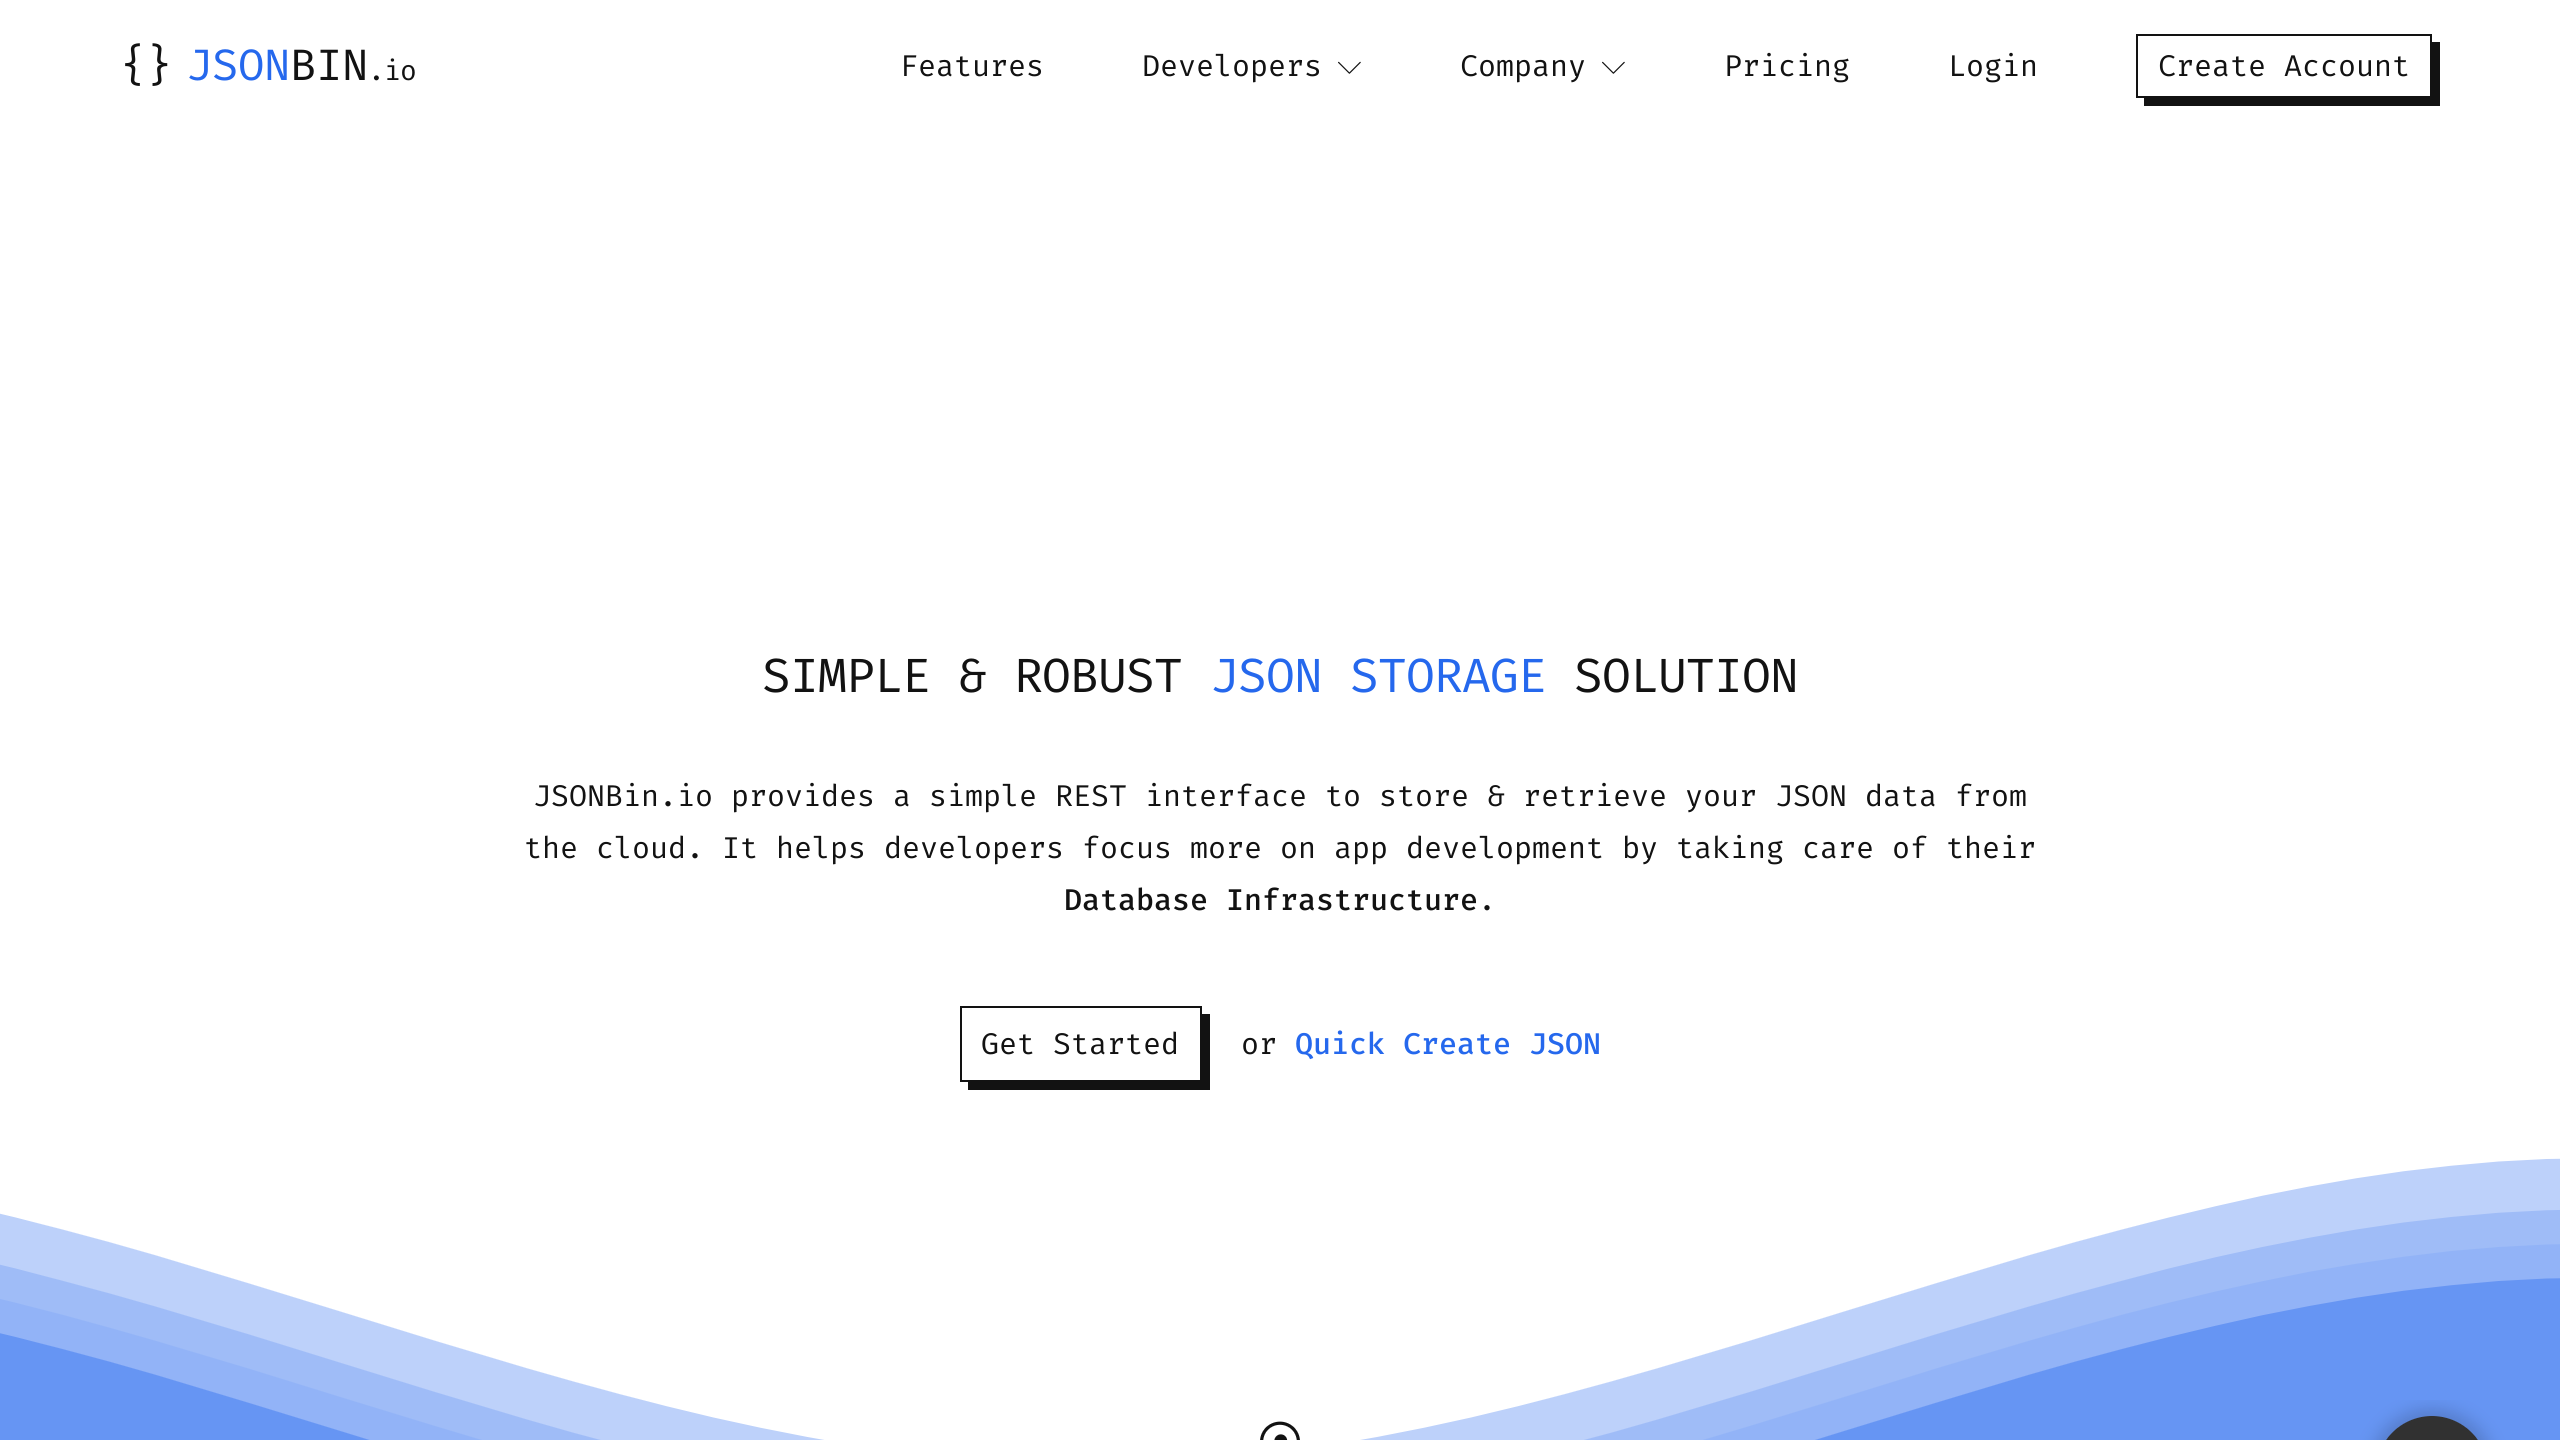 JSONbin.io's website screenshot